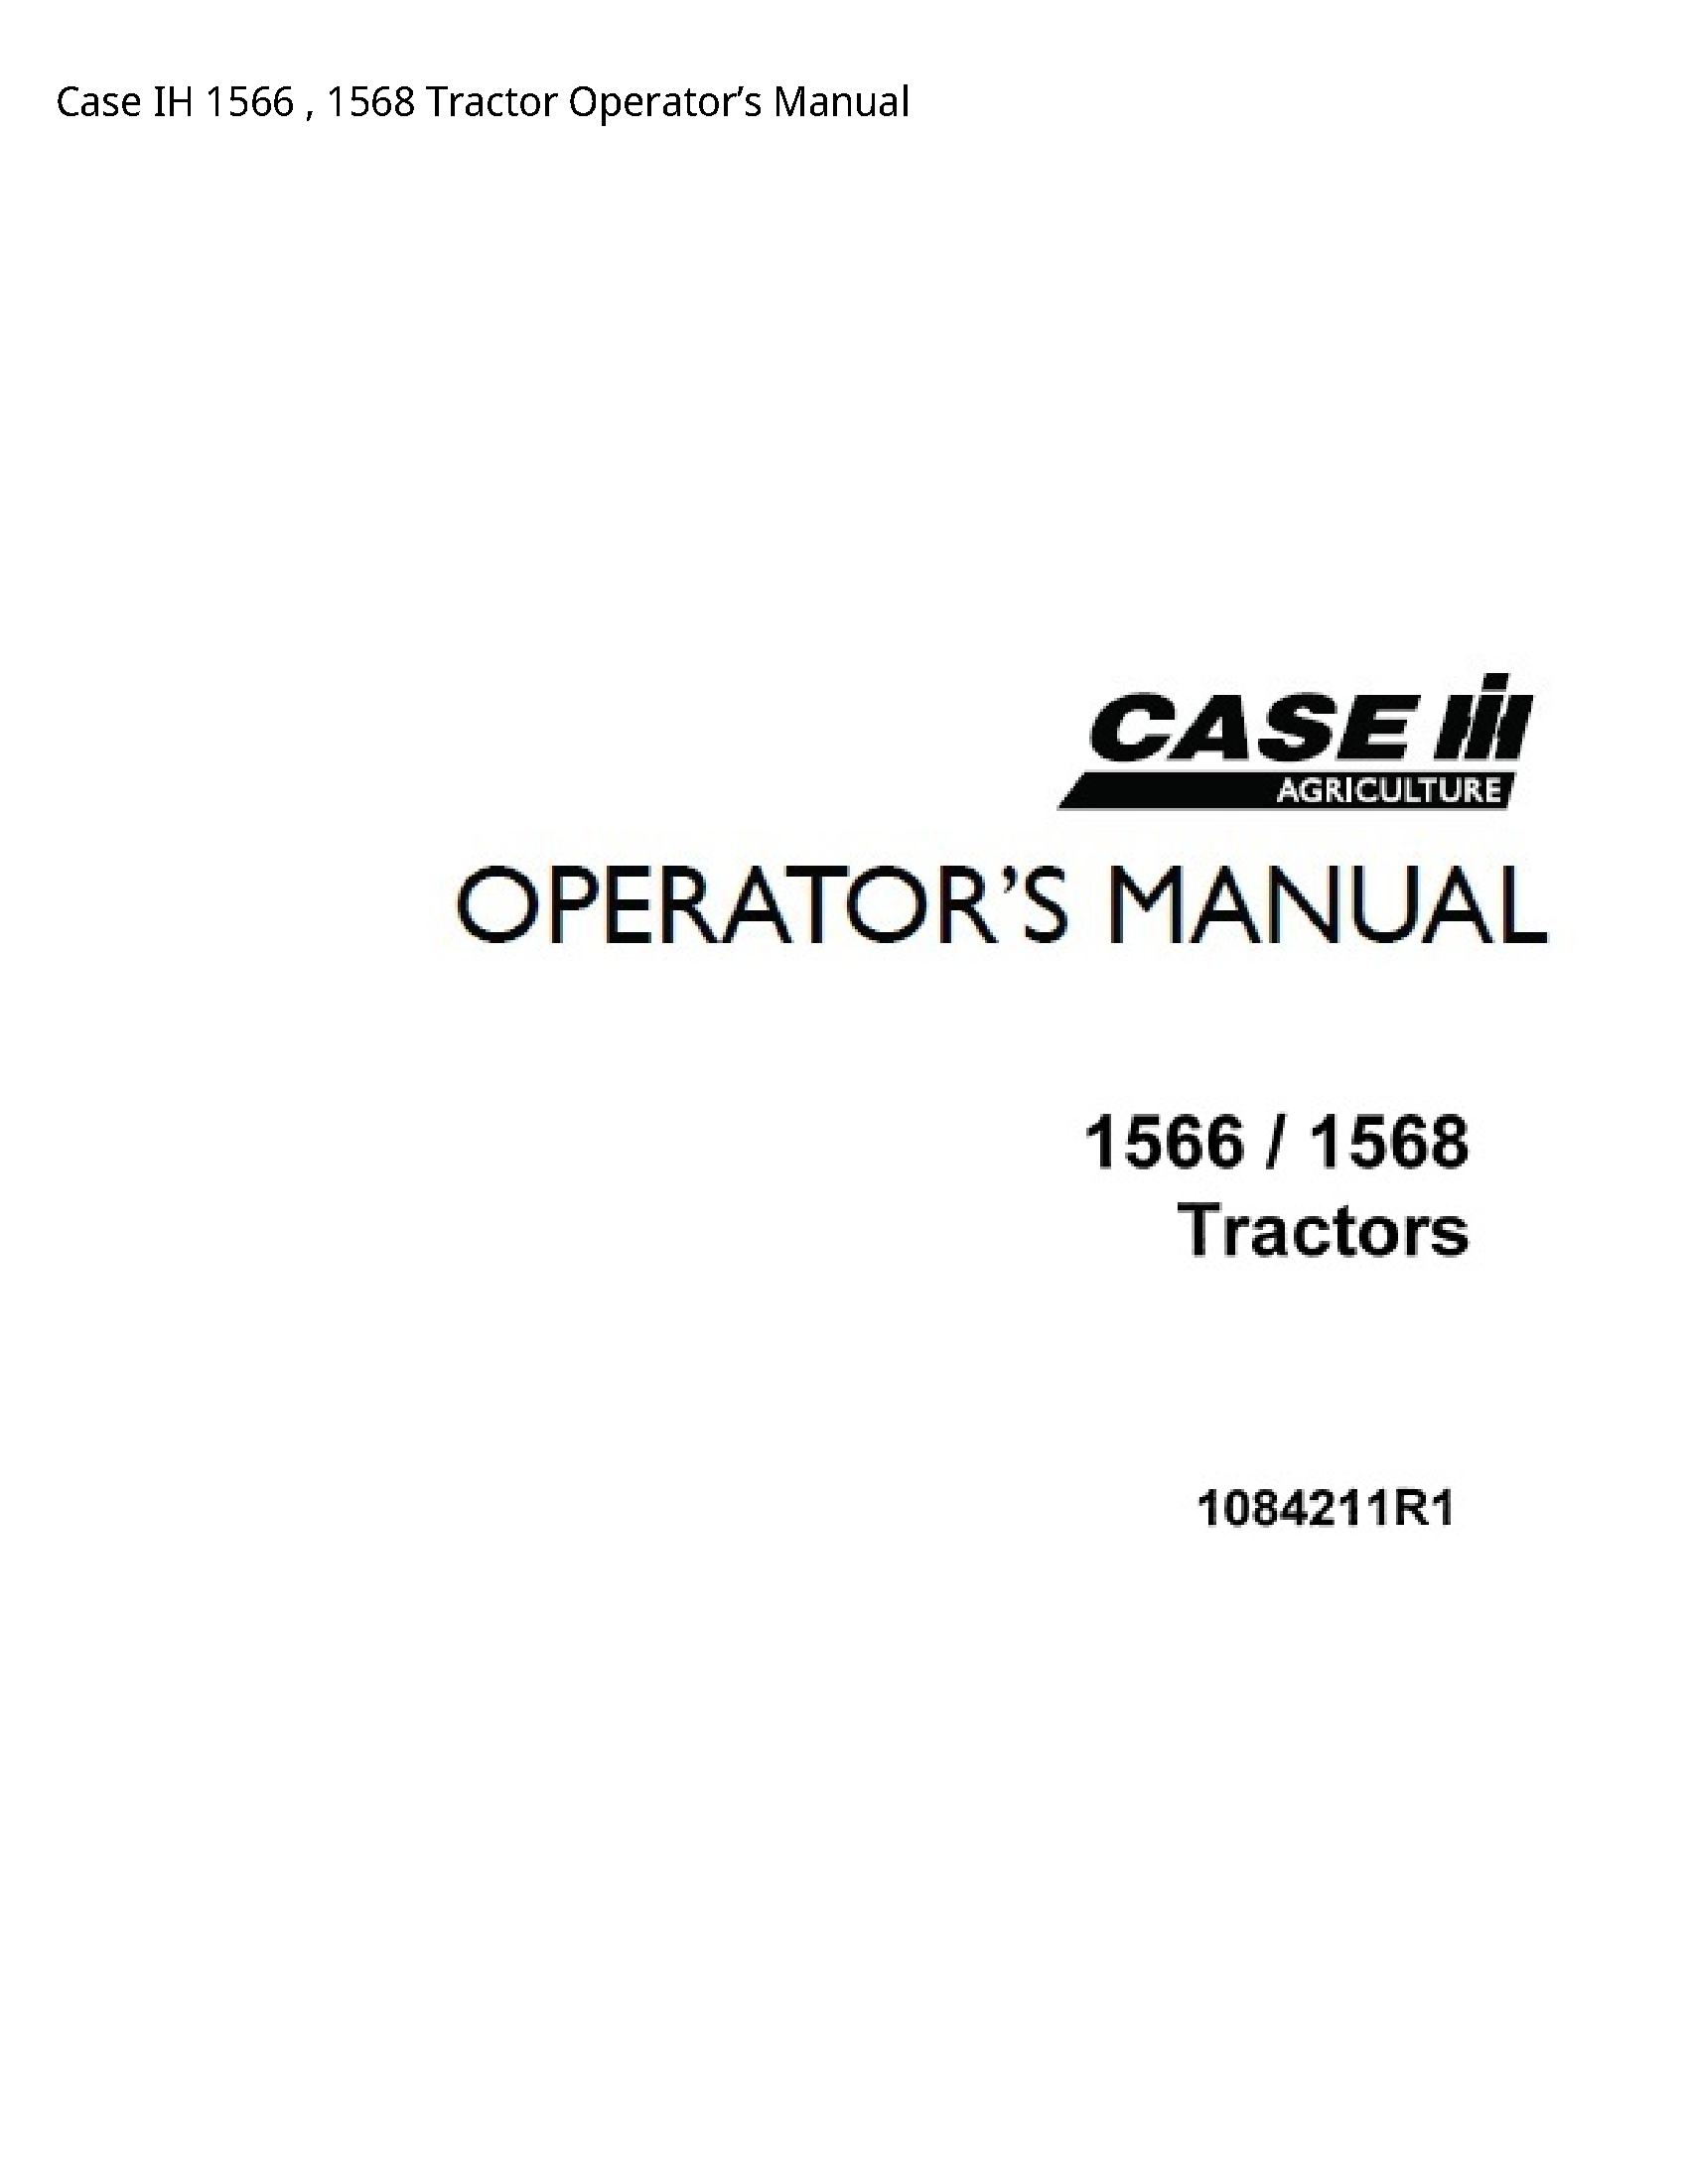 Case/Case IH 1566 IH Tractor Operator’s manual